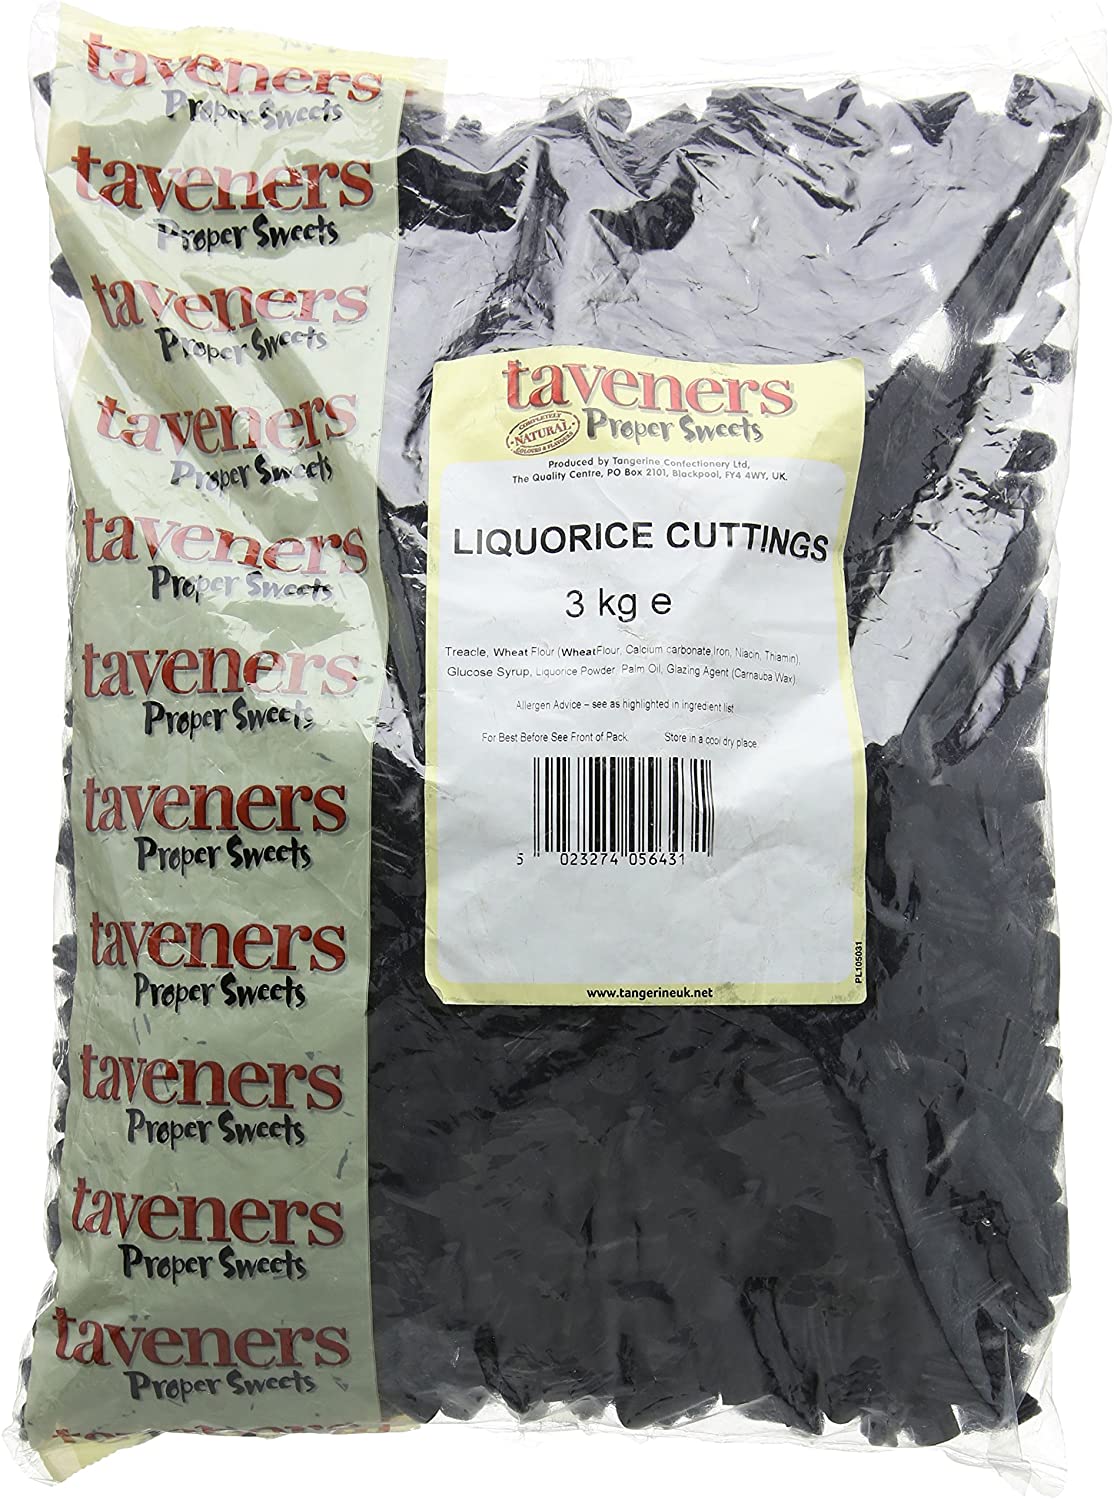 Taveners Liquorice Cuttings 3kg